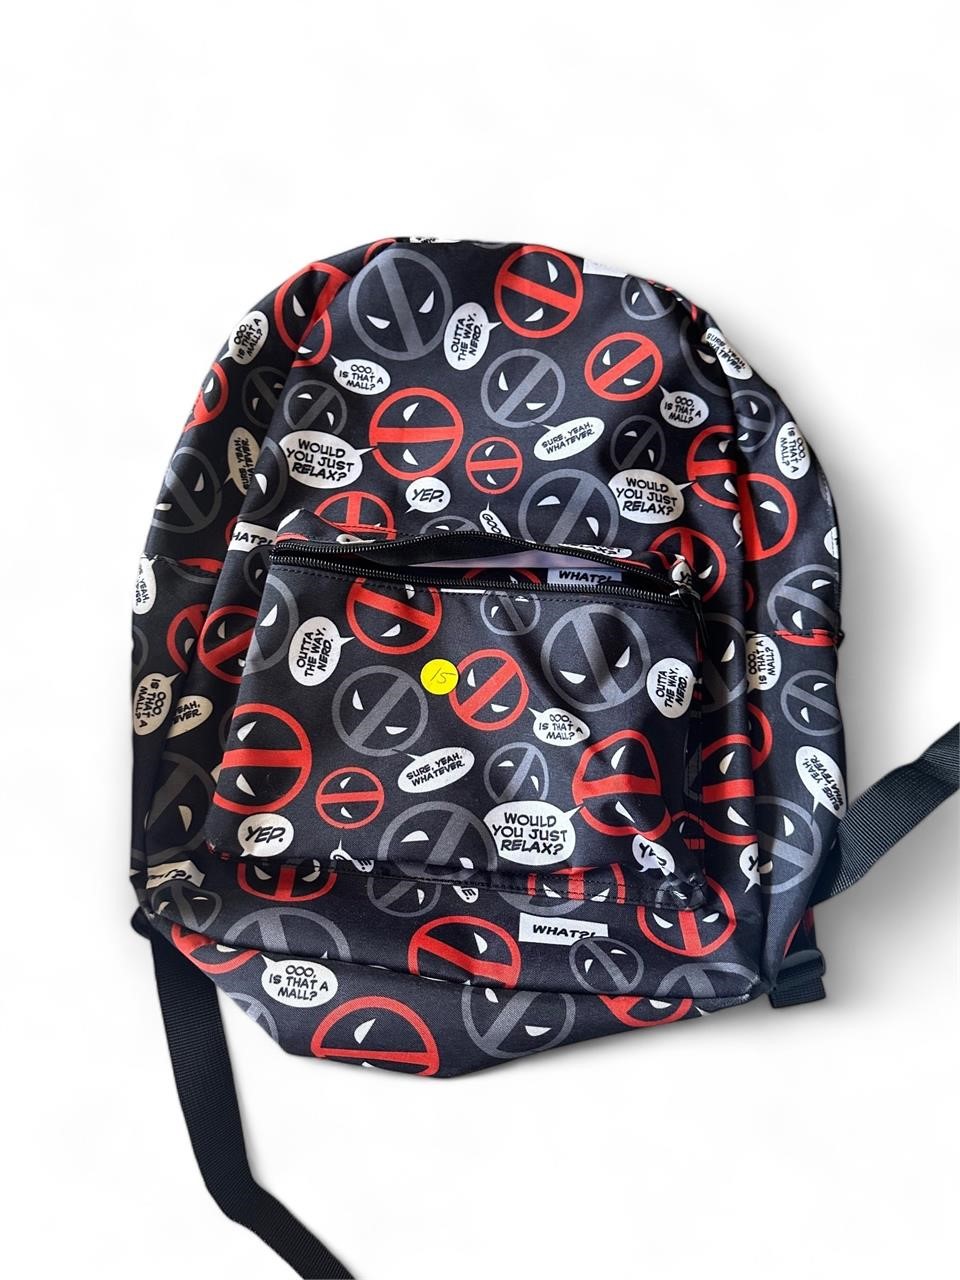 Deadpool Backpack